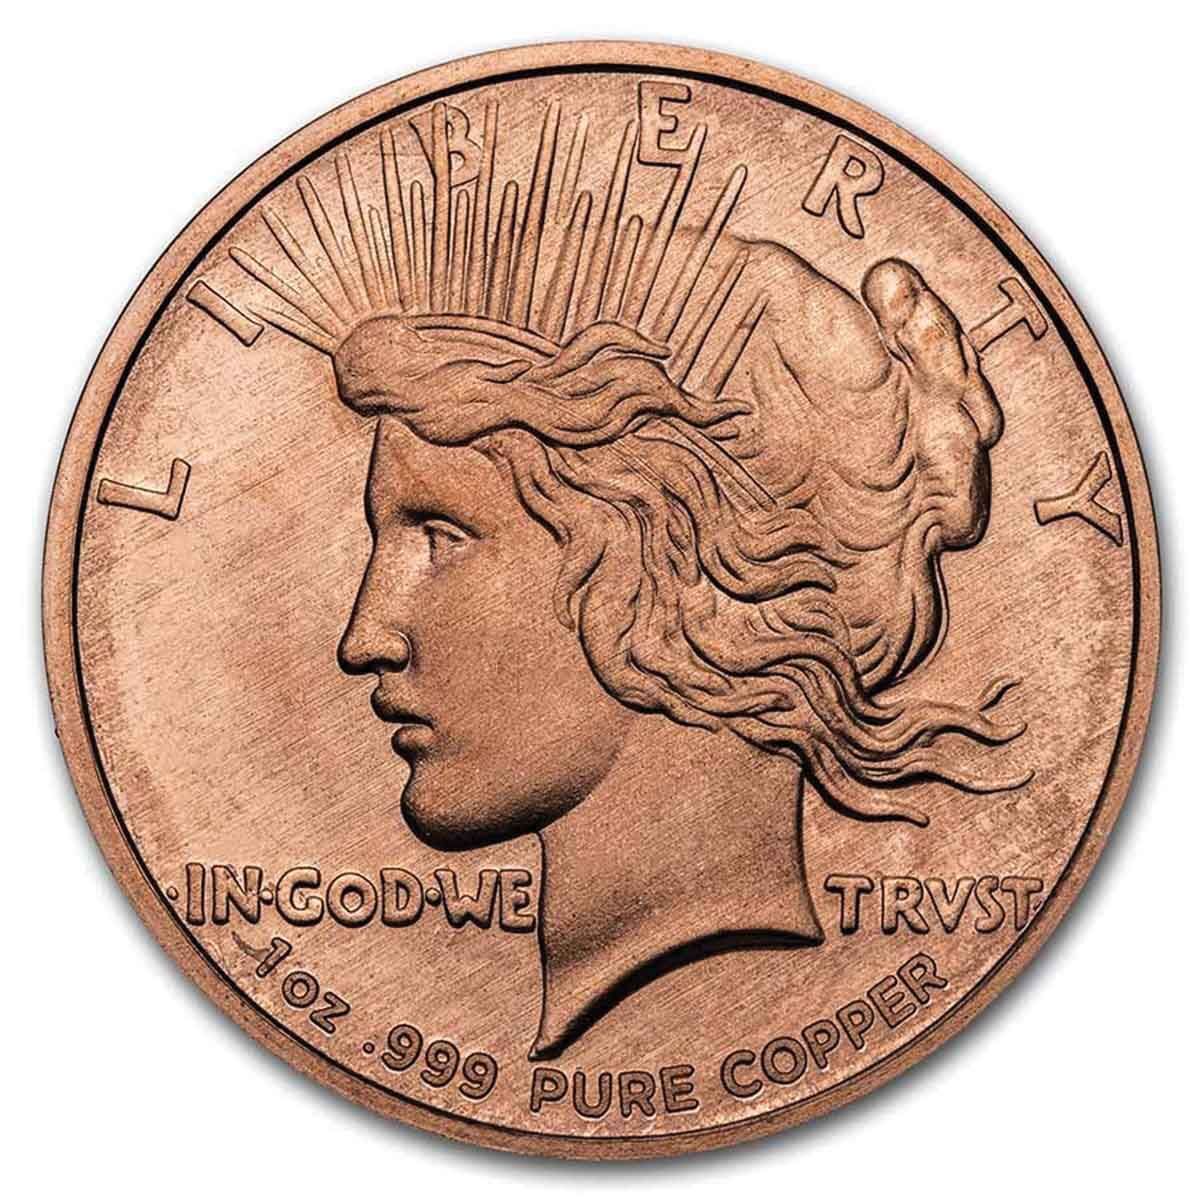 US Peace Dollar 1oz Copper Round